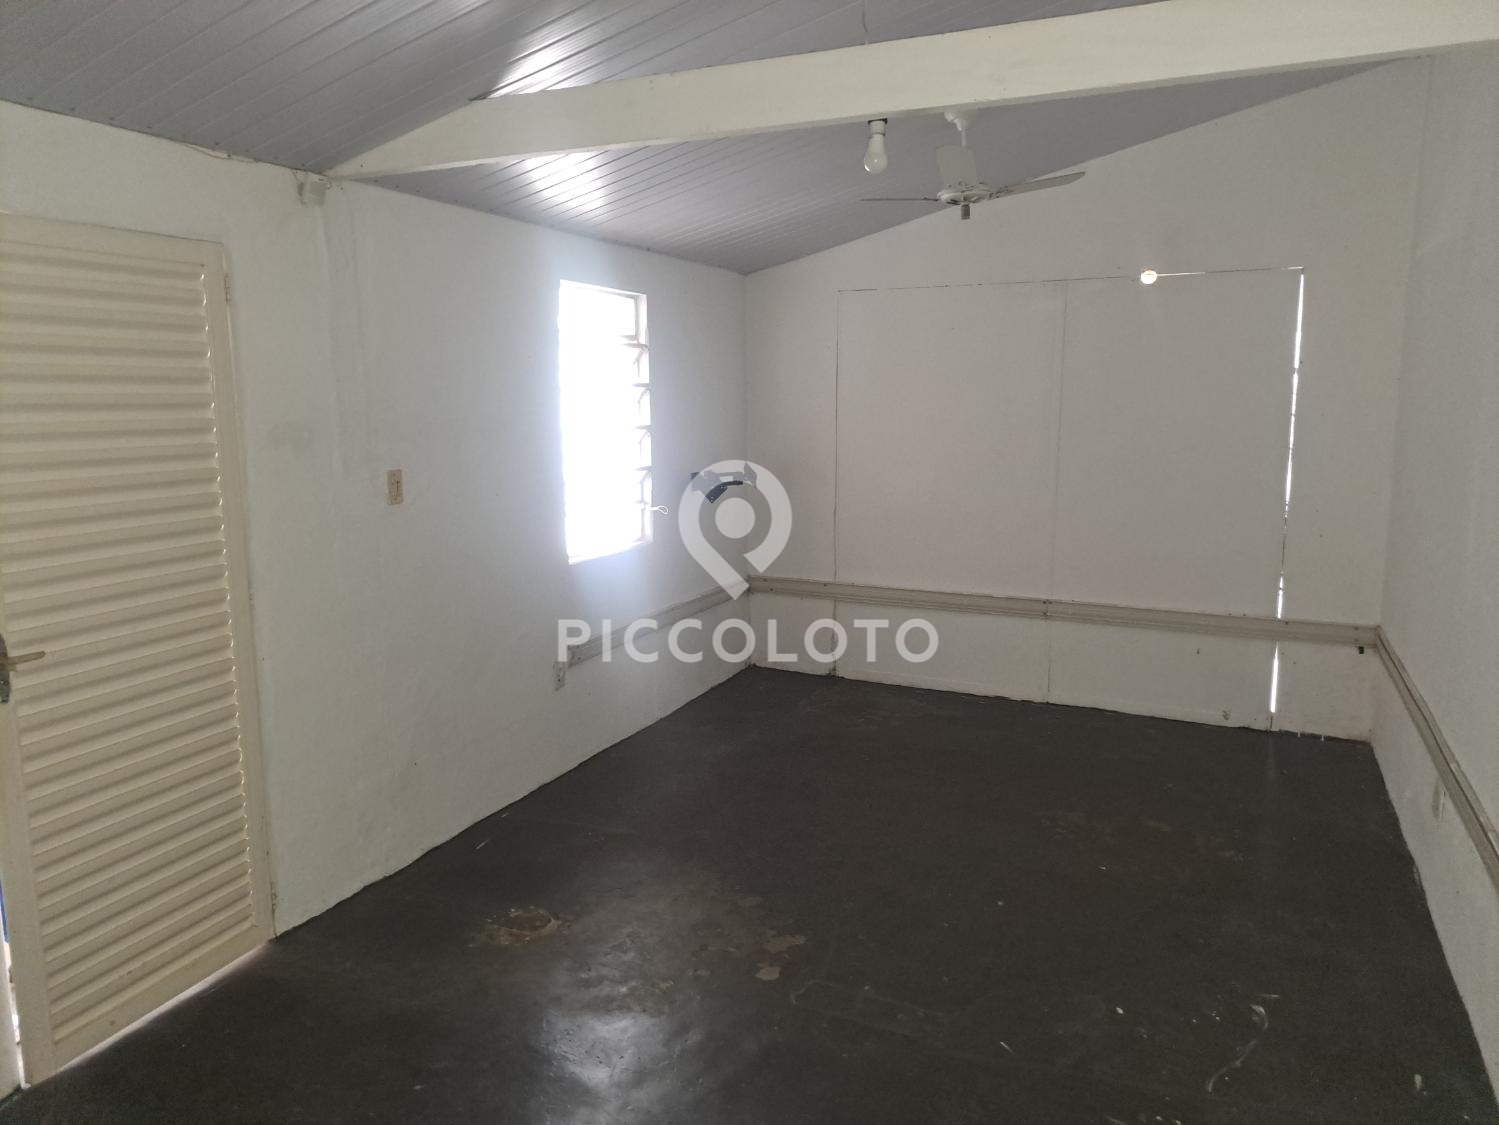 Piccoloto -Casa à venda no Taquaral em Campinas